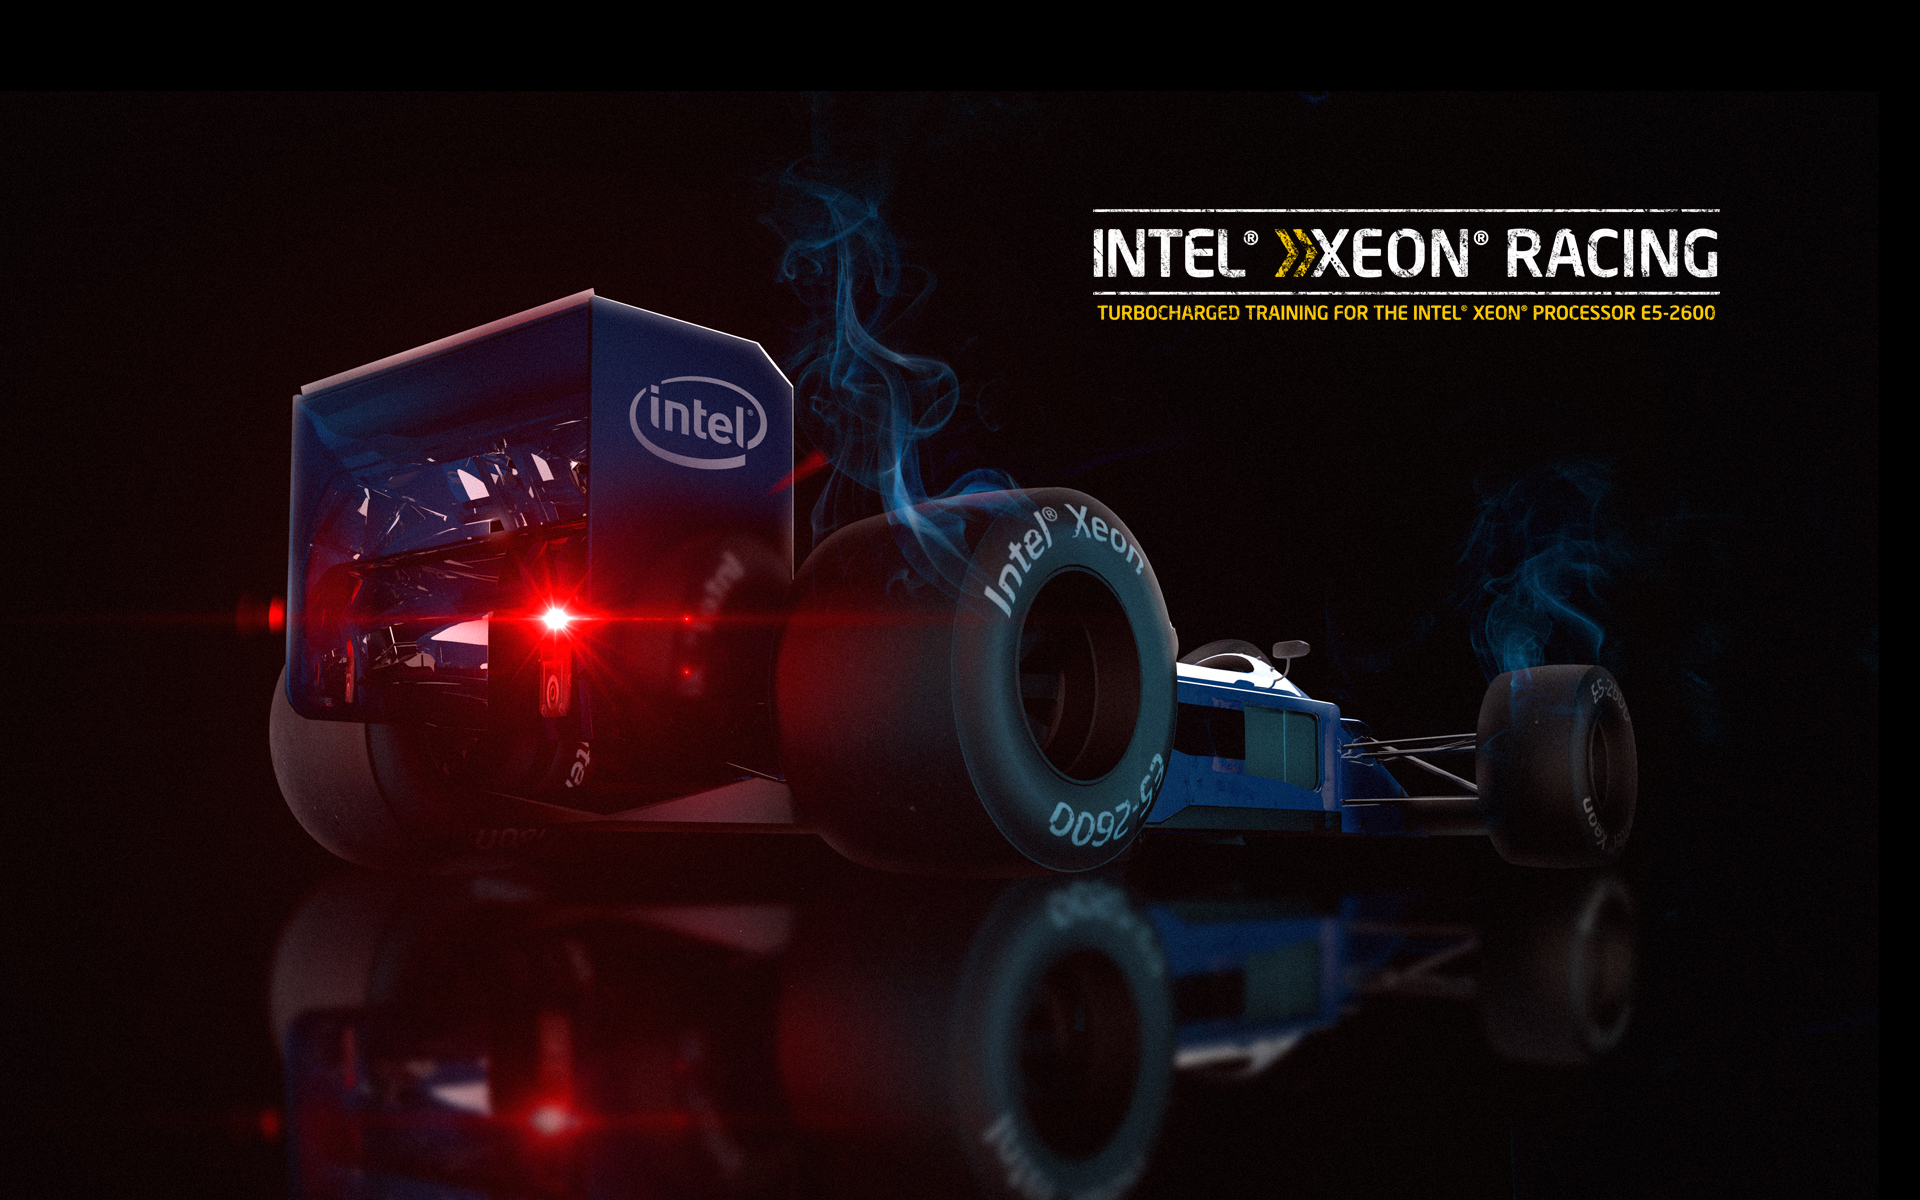 Intel Xeon Racing Turbocharged Training For The